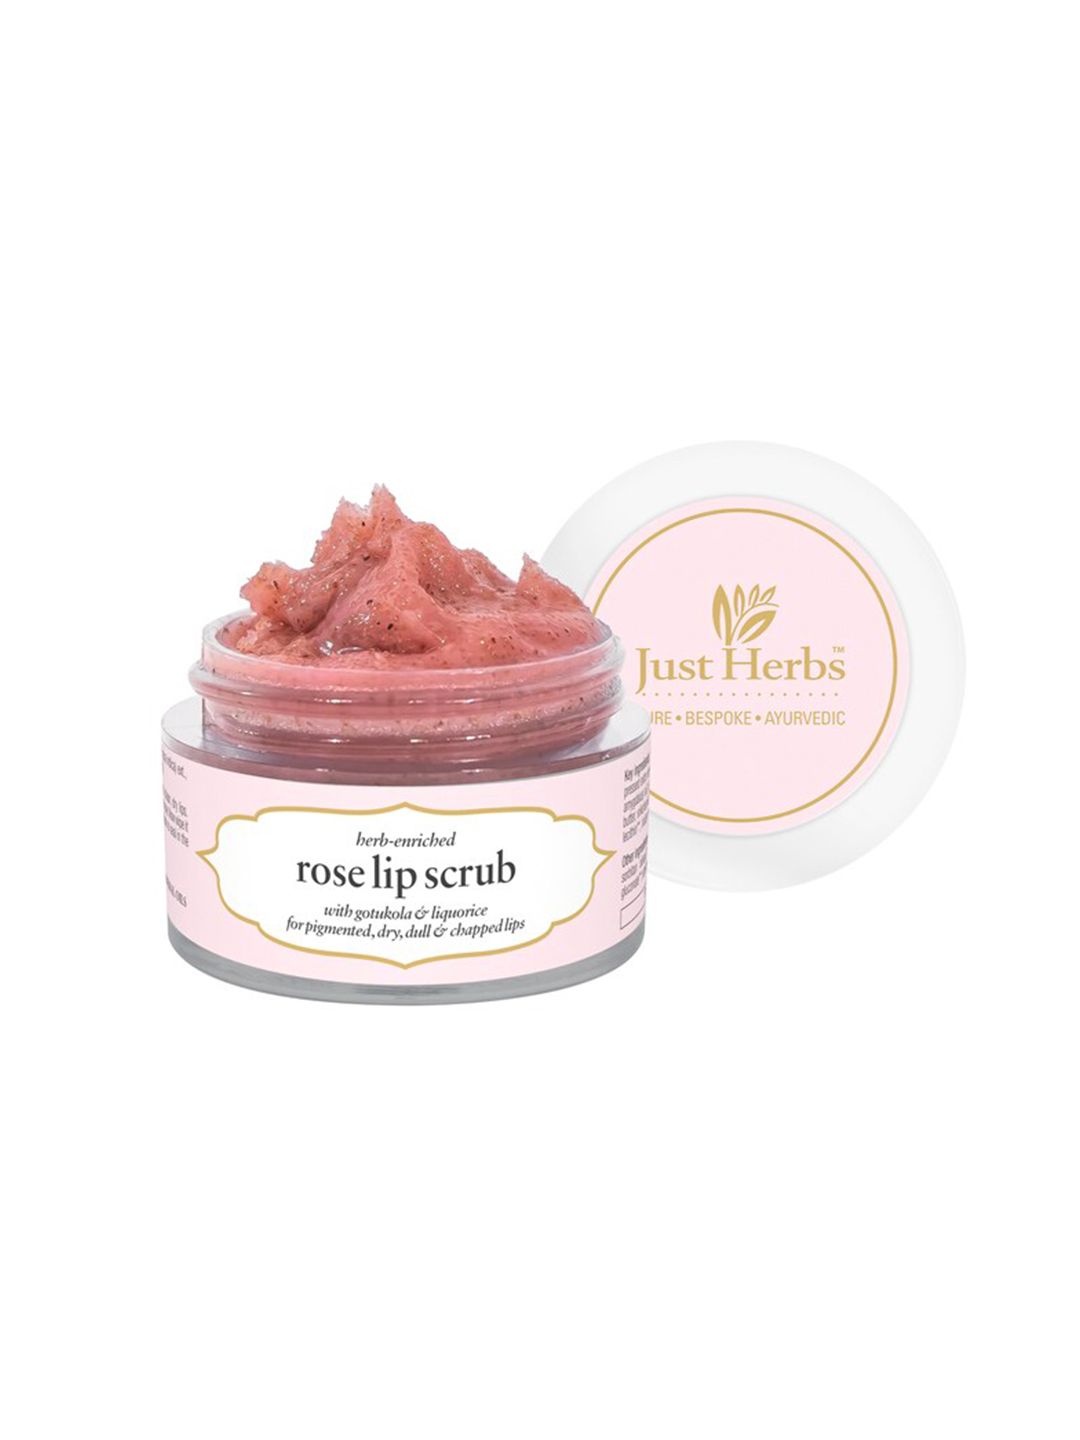 Just Herbs Herb-Enriched Vegan Rose Lip Scrub 15 gm Price in India